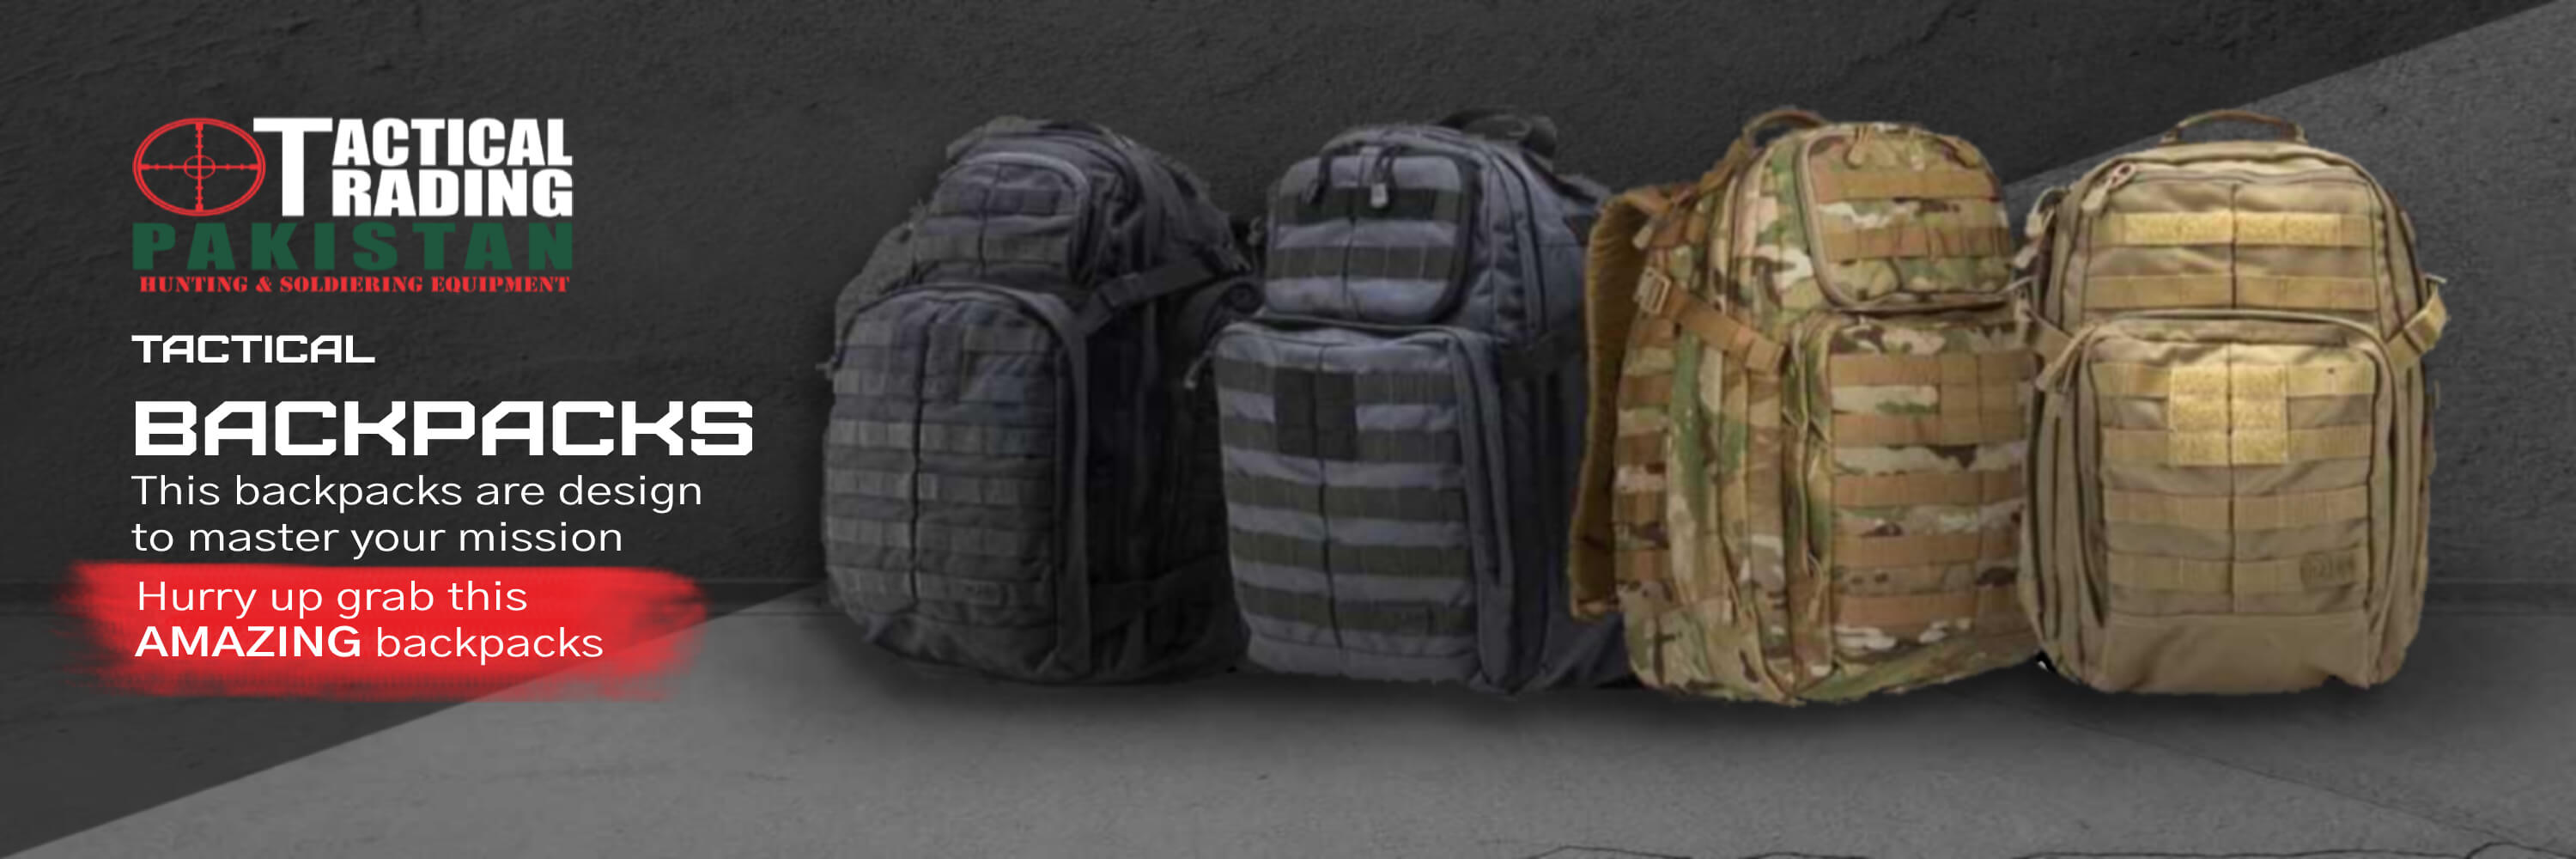 Tactical Banner backpacks